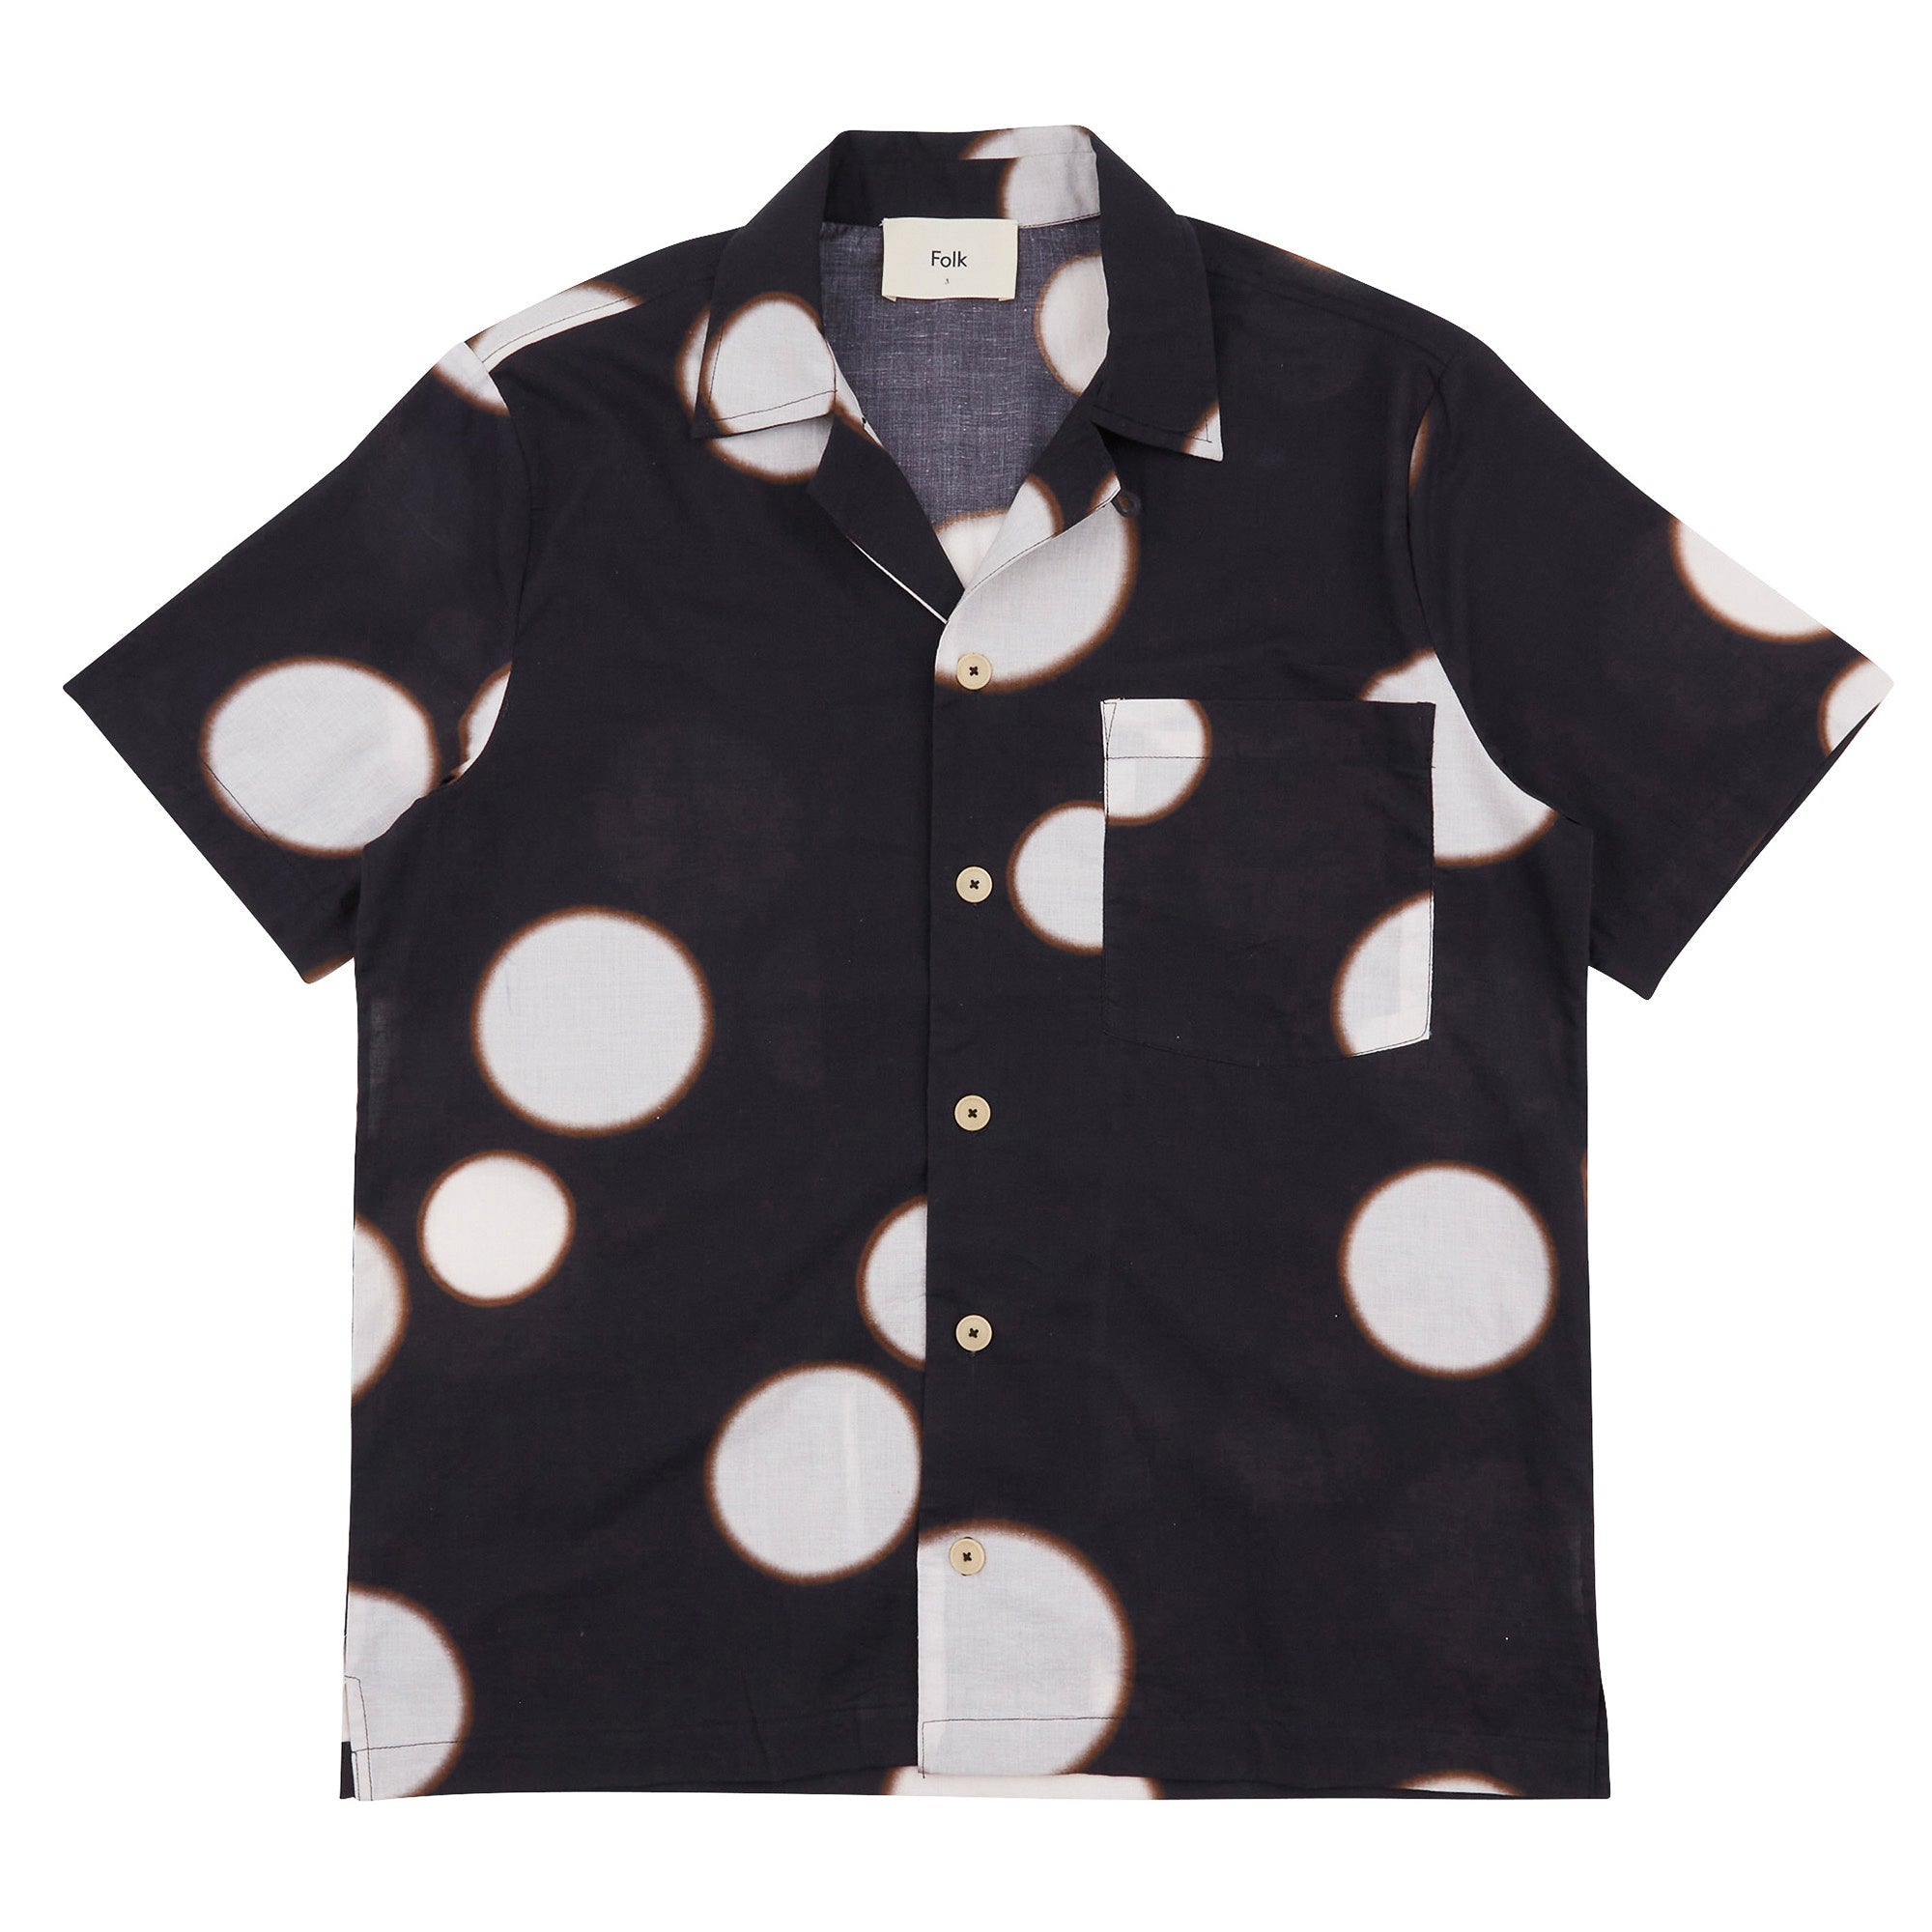 Folk Soft Collar Shirt - Black Ecru Dot